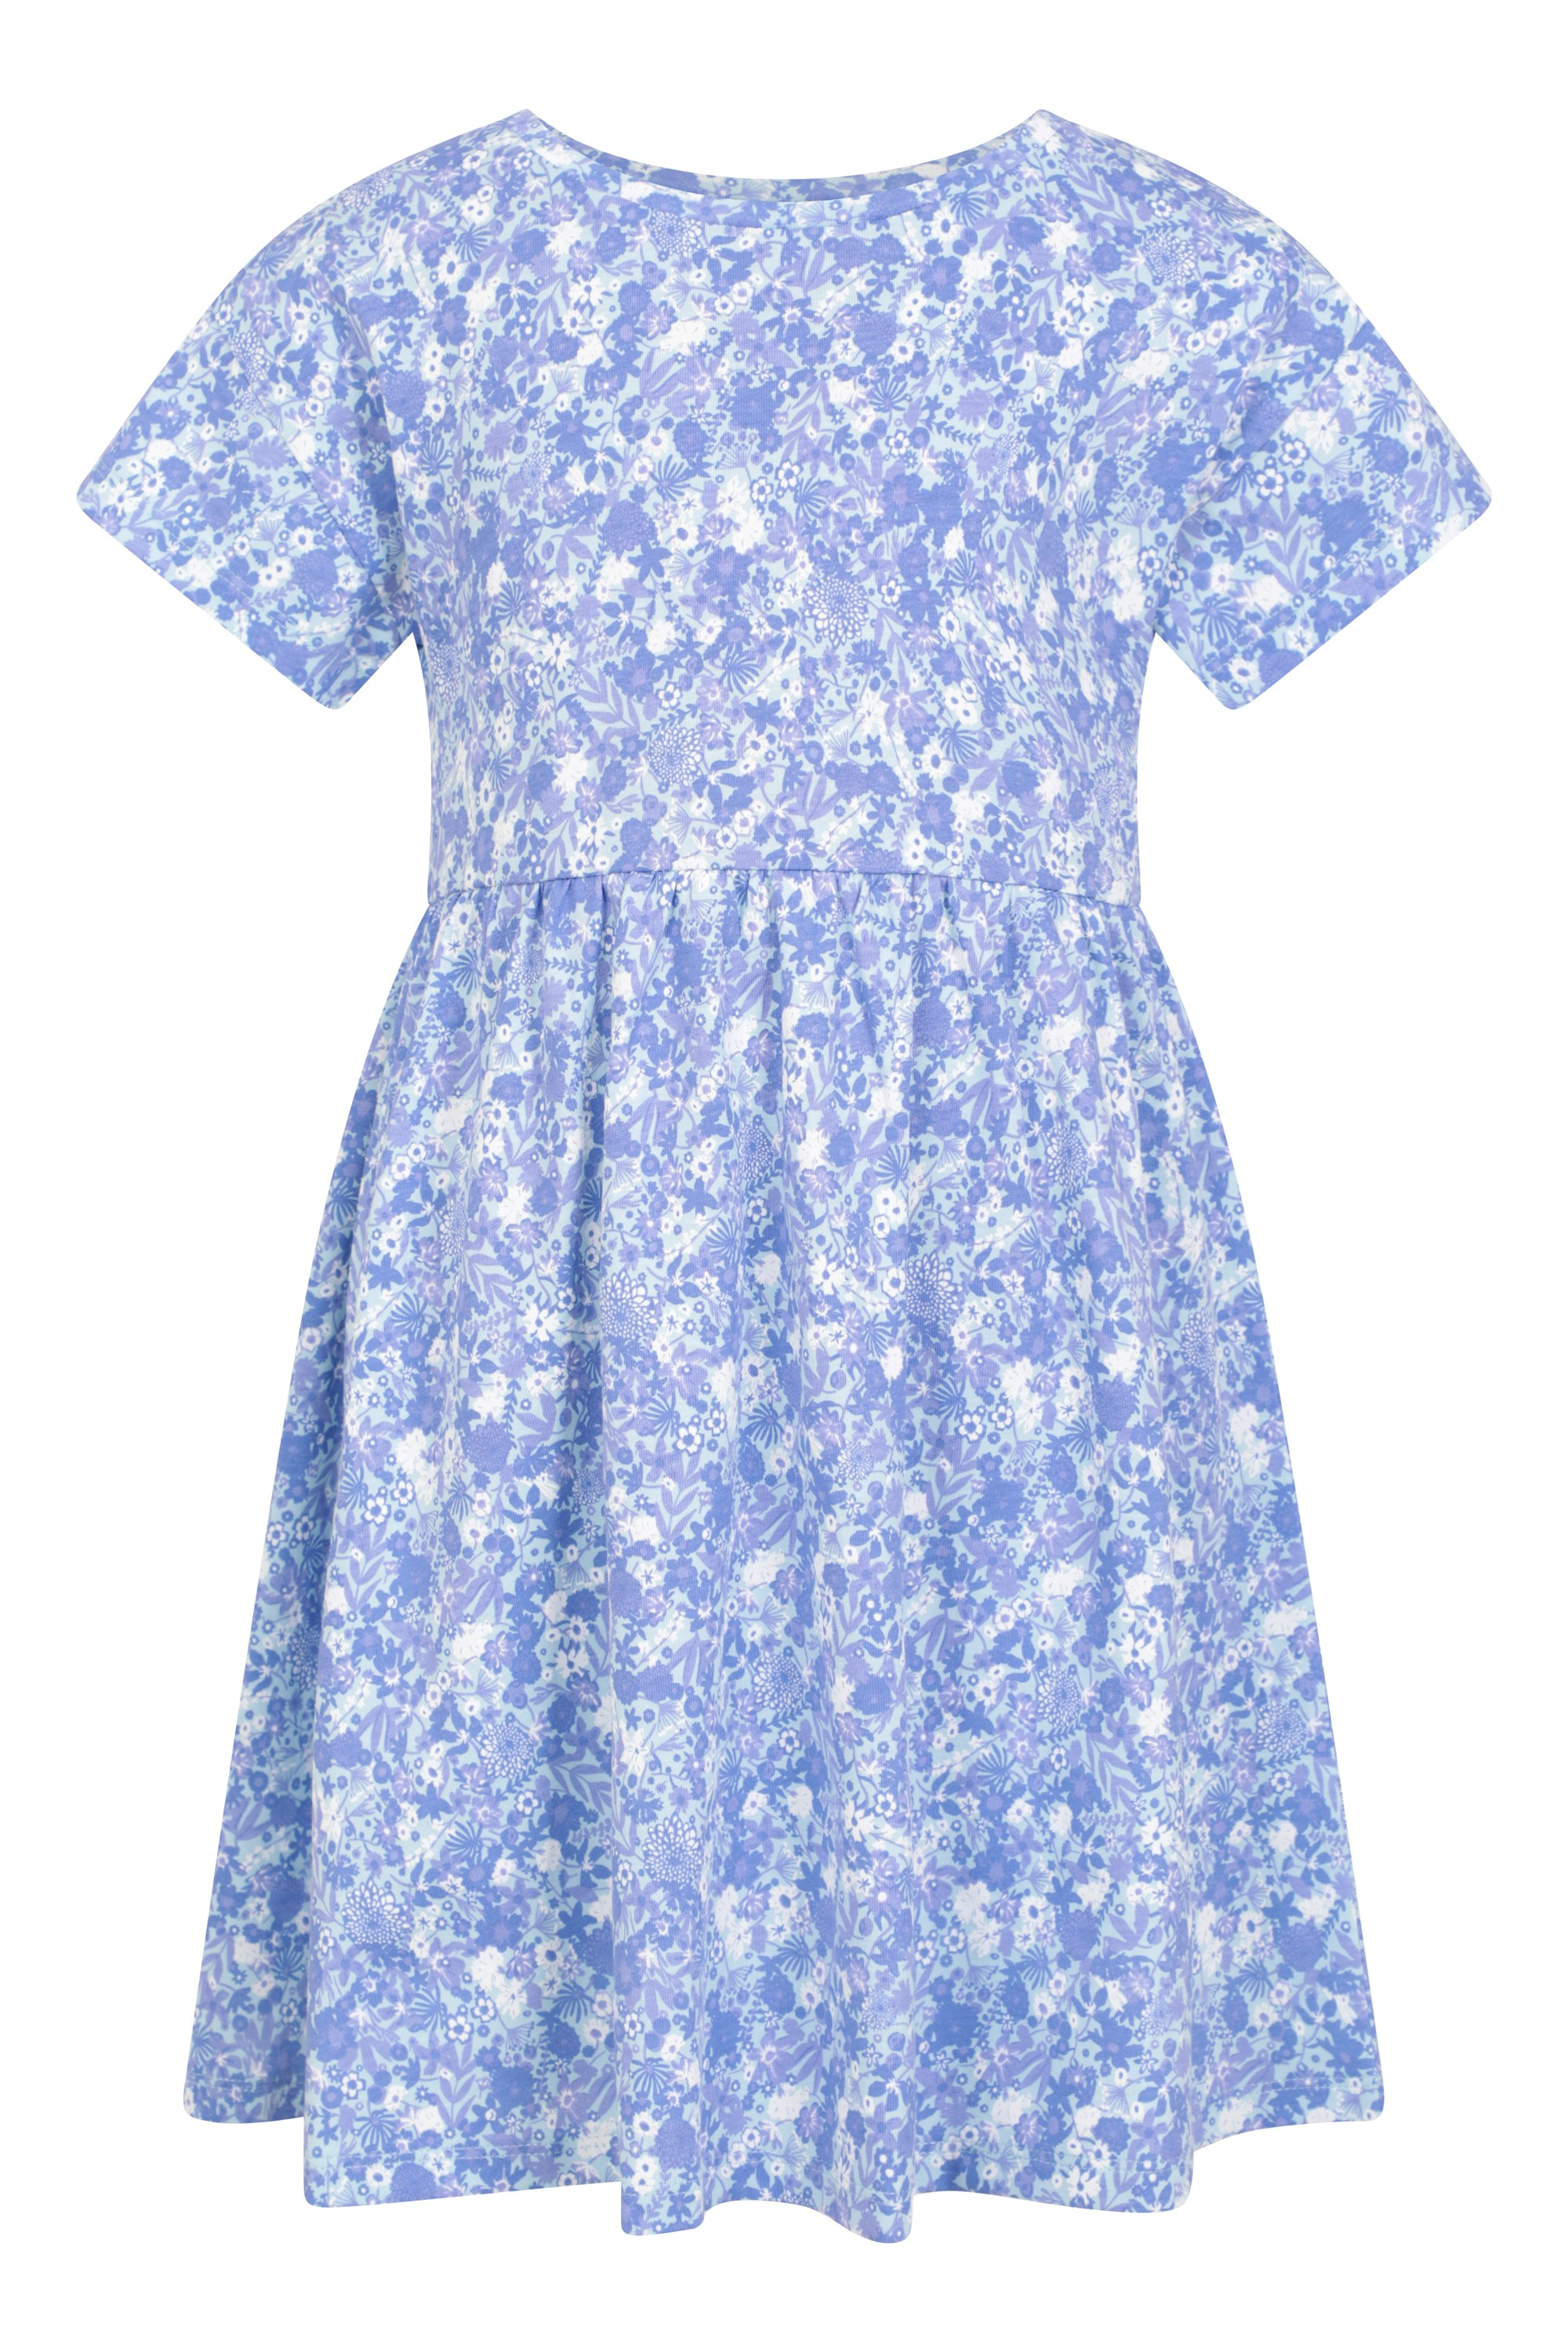 Mountain Essentials Kids Lora Printed Dress - Blue